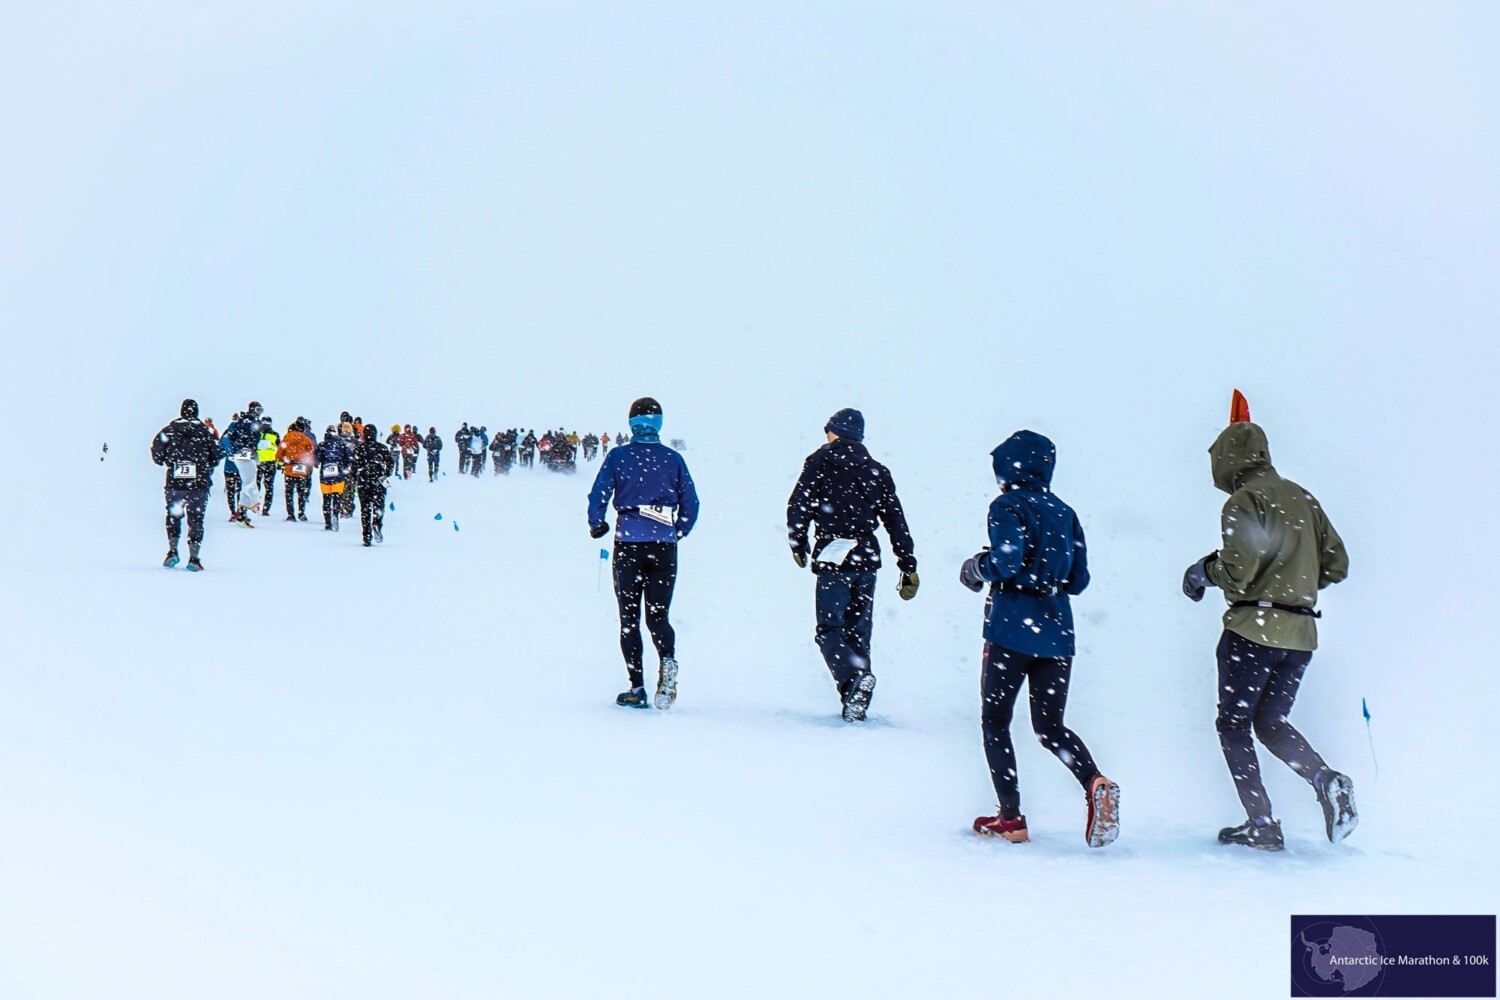 Antarctic Ice Marathon 